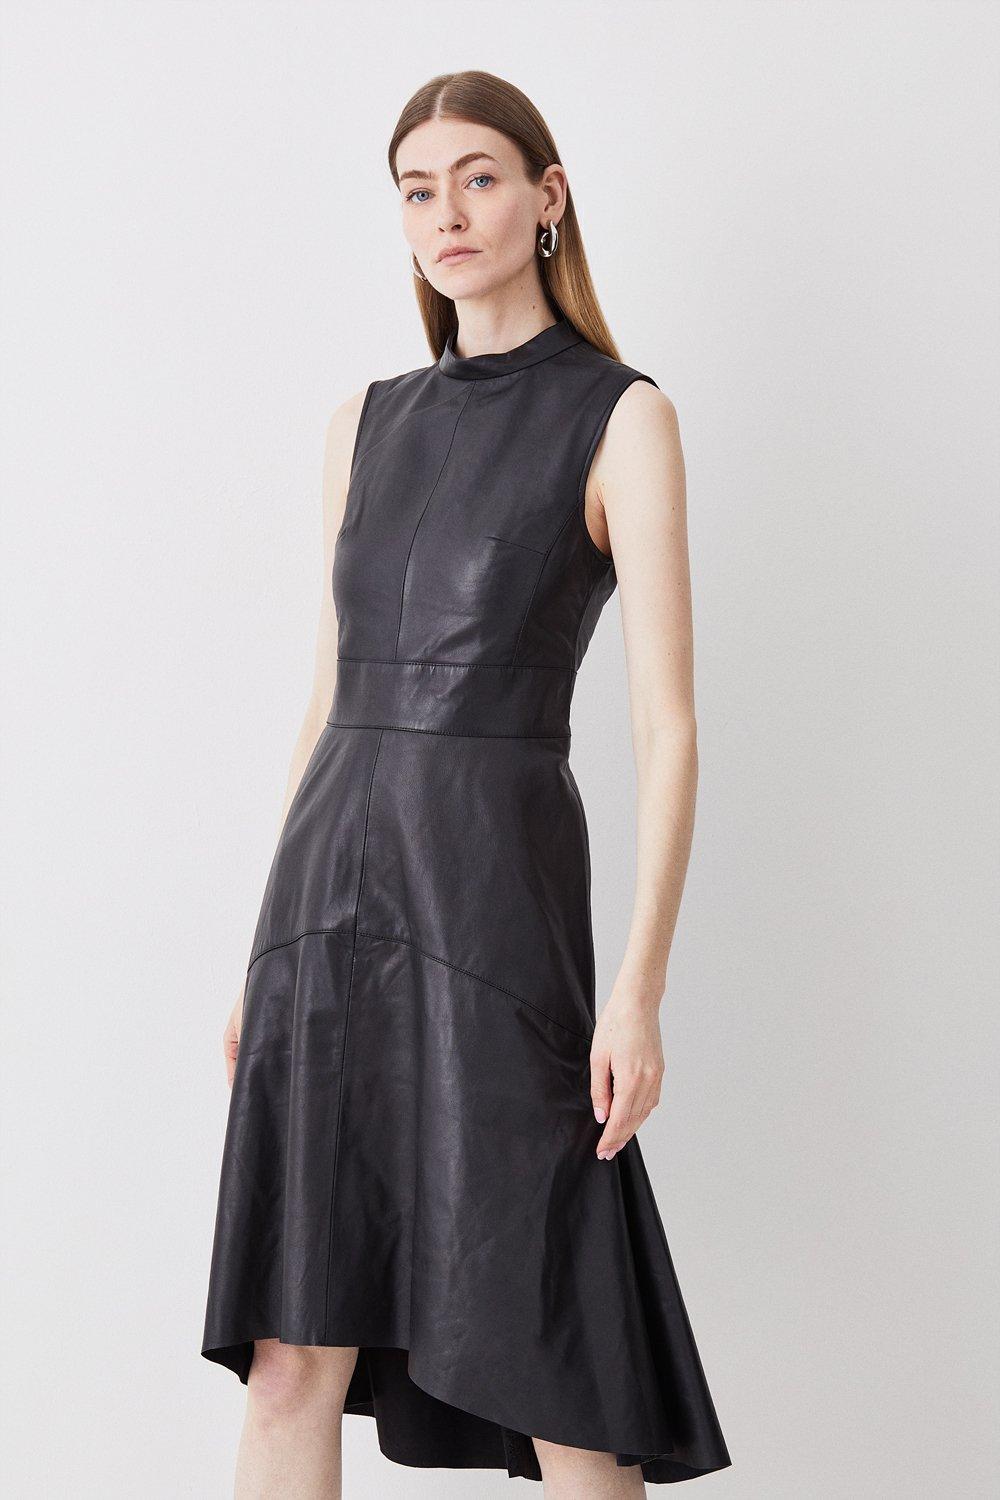 Buy Women's Summer Dress Leather Dresses Online